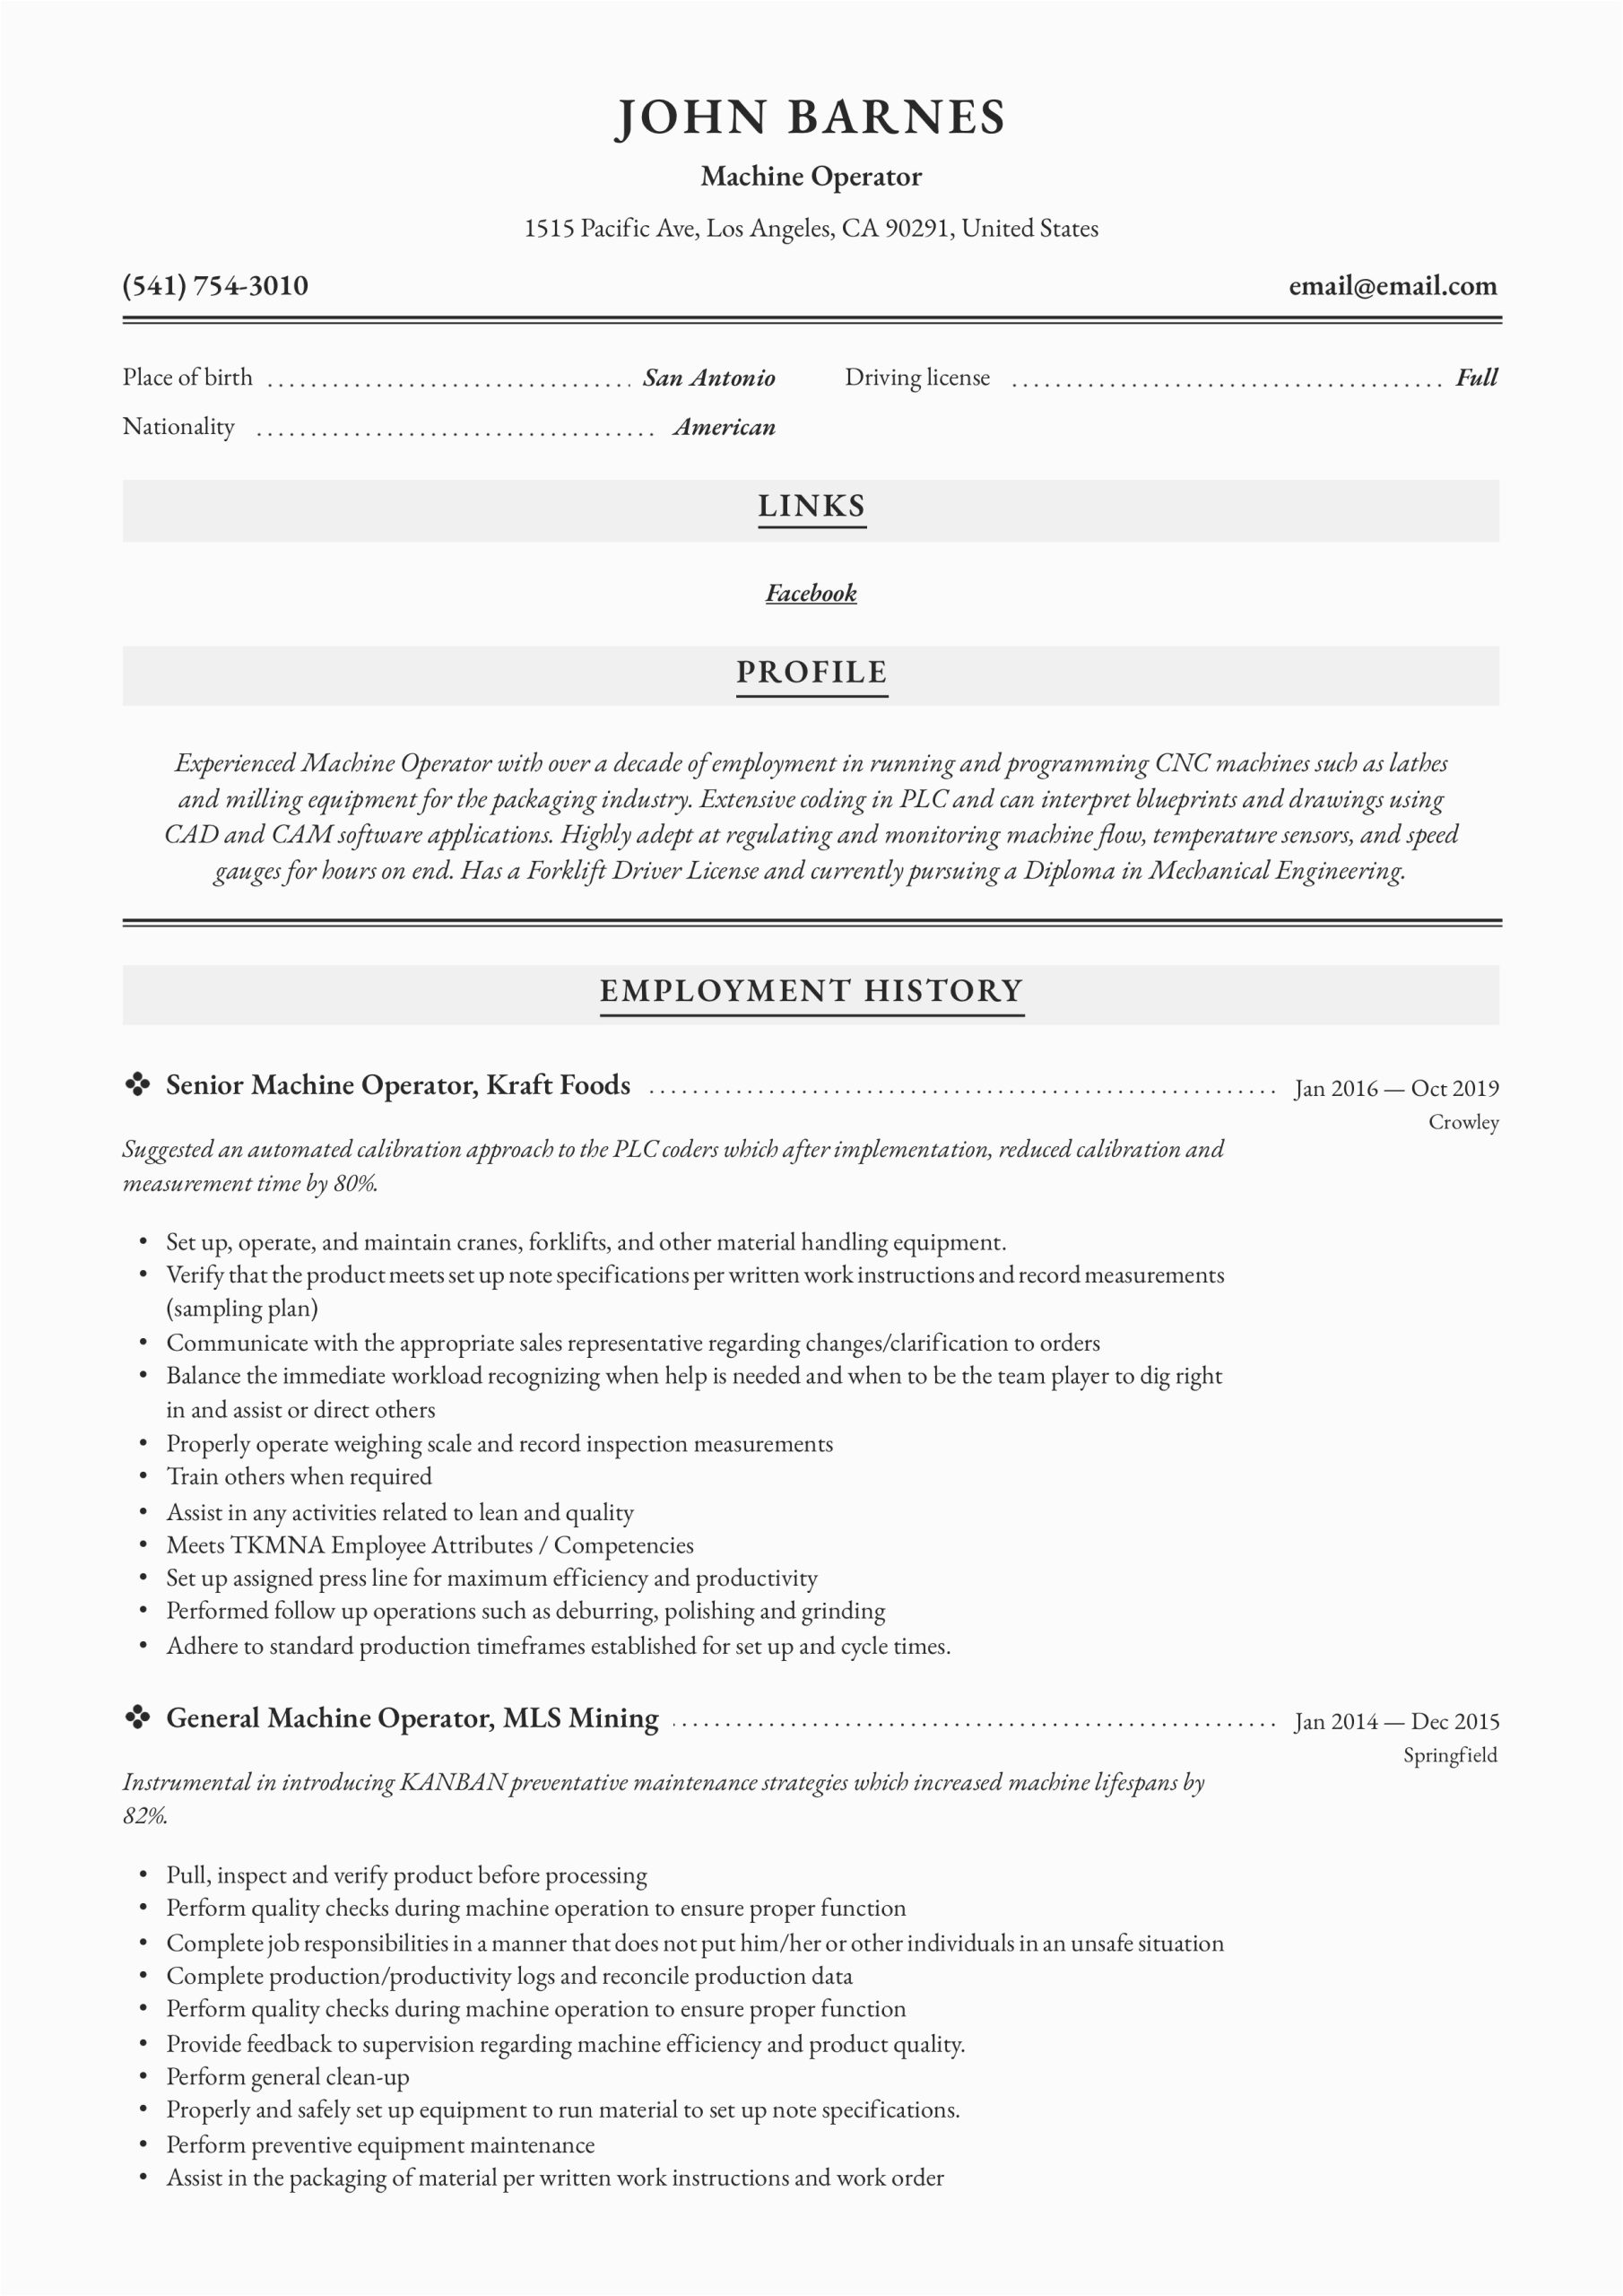 Machine Operator Job Description Sample Resume Machine Operator Resume & Writing Guide 12 Templates